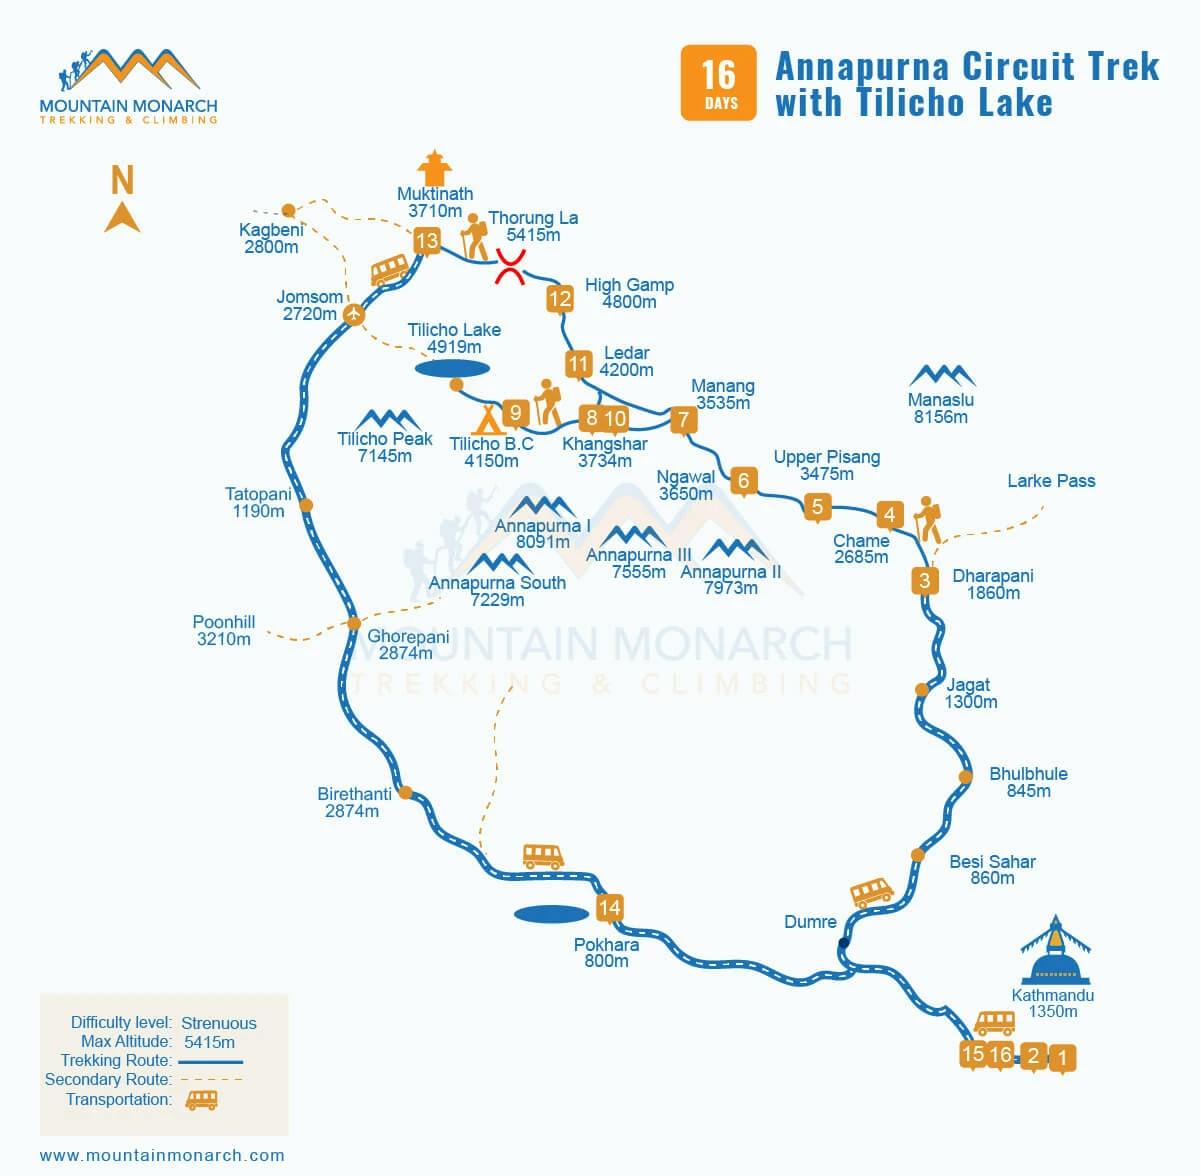 trek map of Annapurna circuit and Tilicho lakes